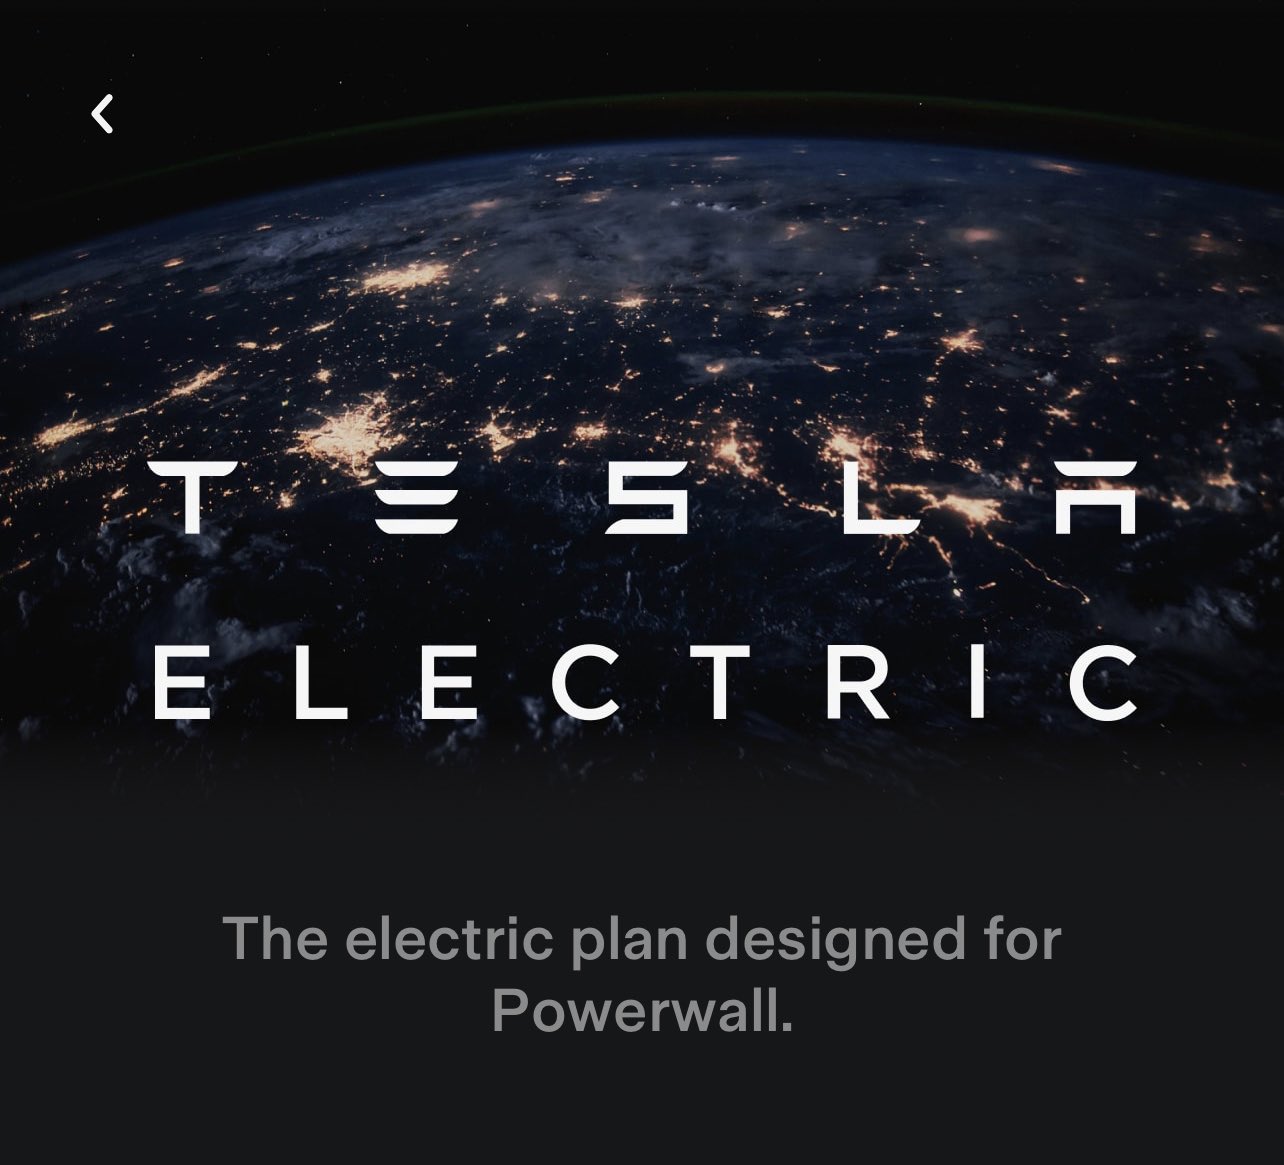 Tesla launches Tesla Electric for Texas